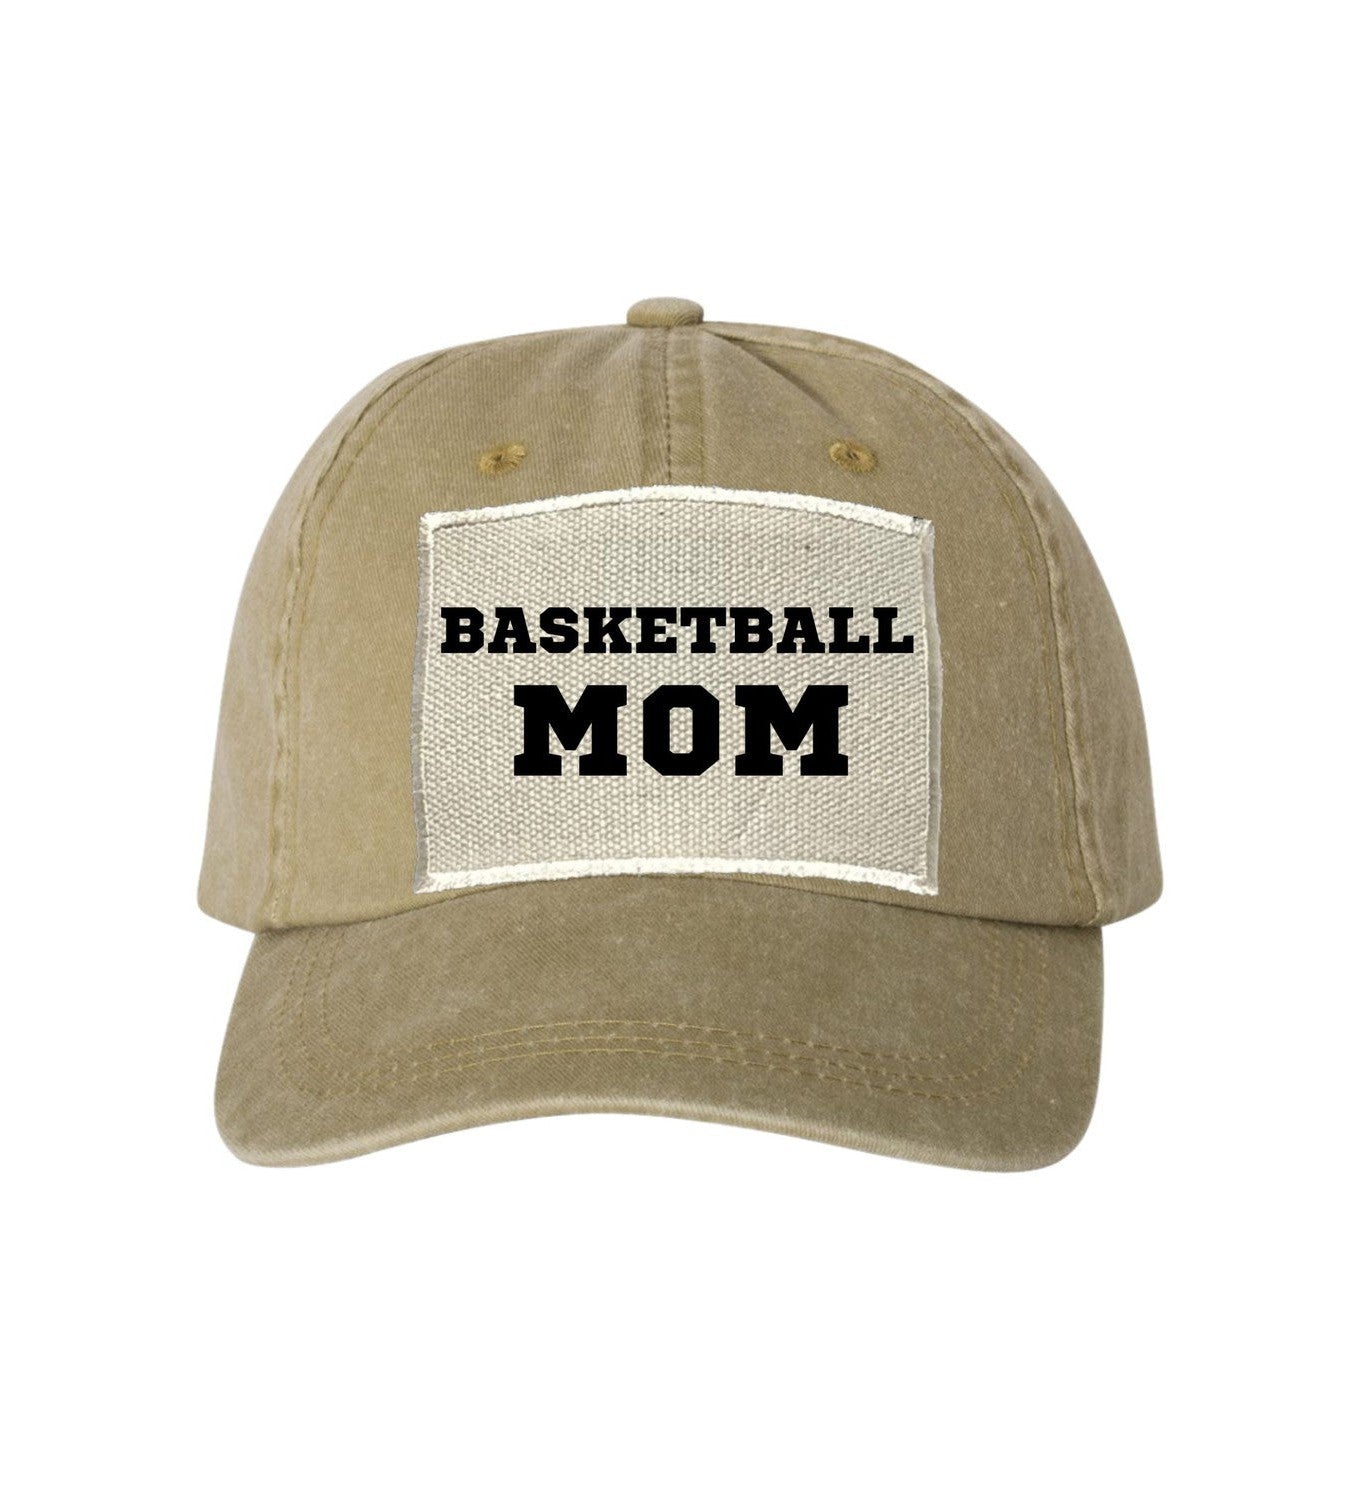 Basketball Mom Ball Cap